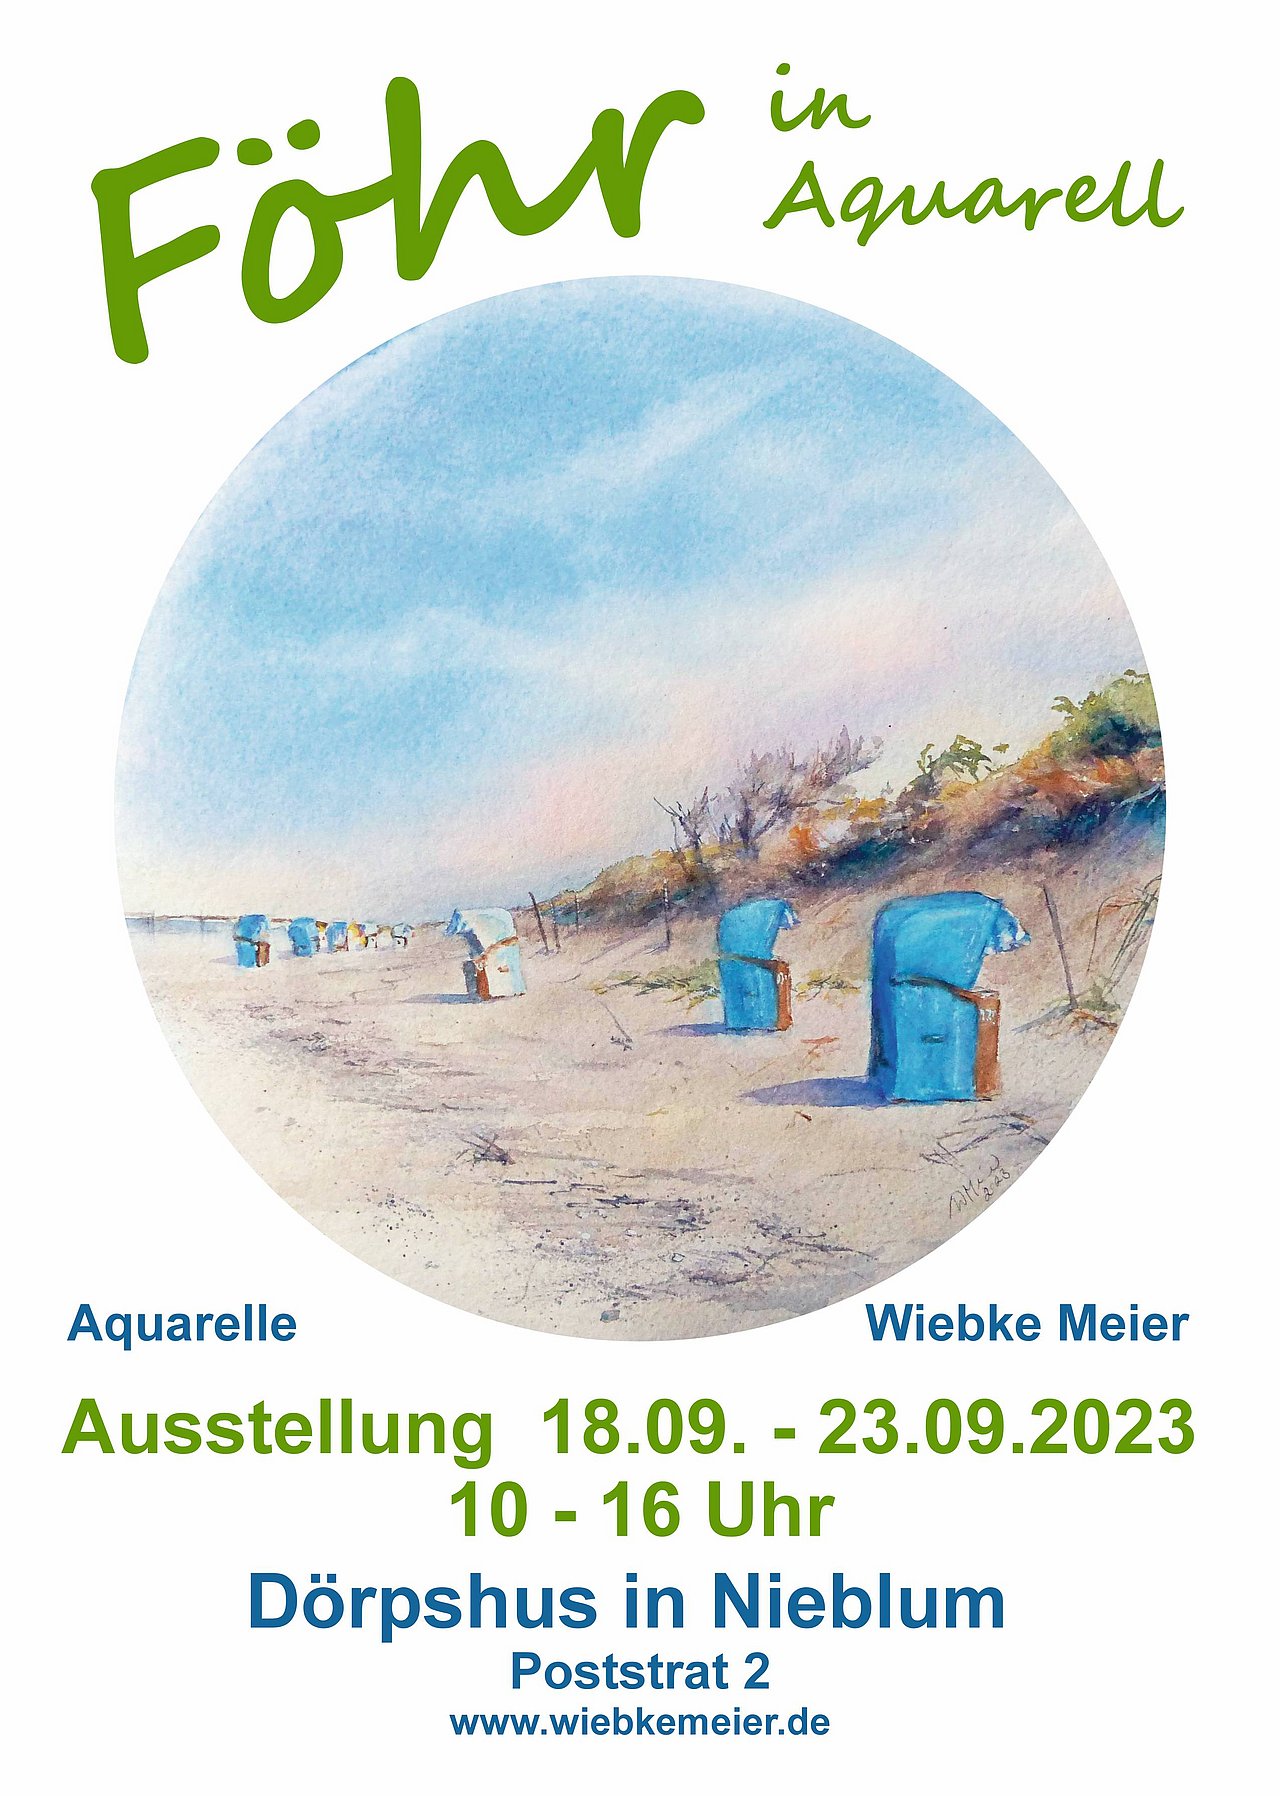 Ausstellung "Föhr in Aquarell" 18.-23.09.2023